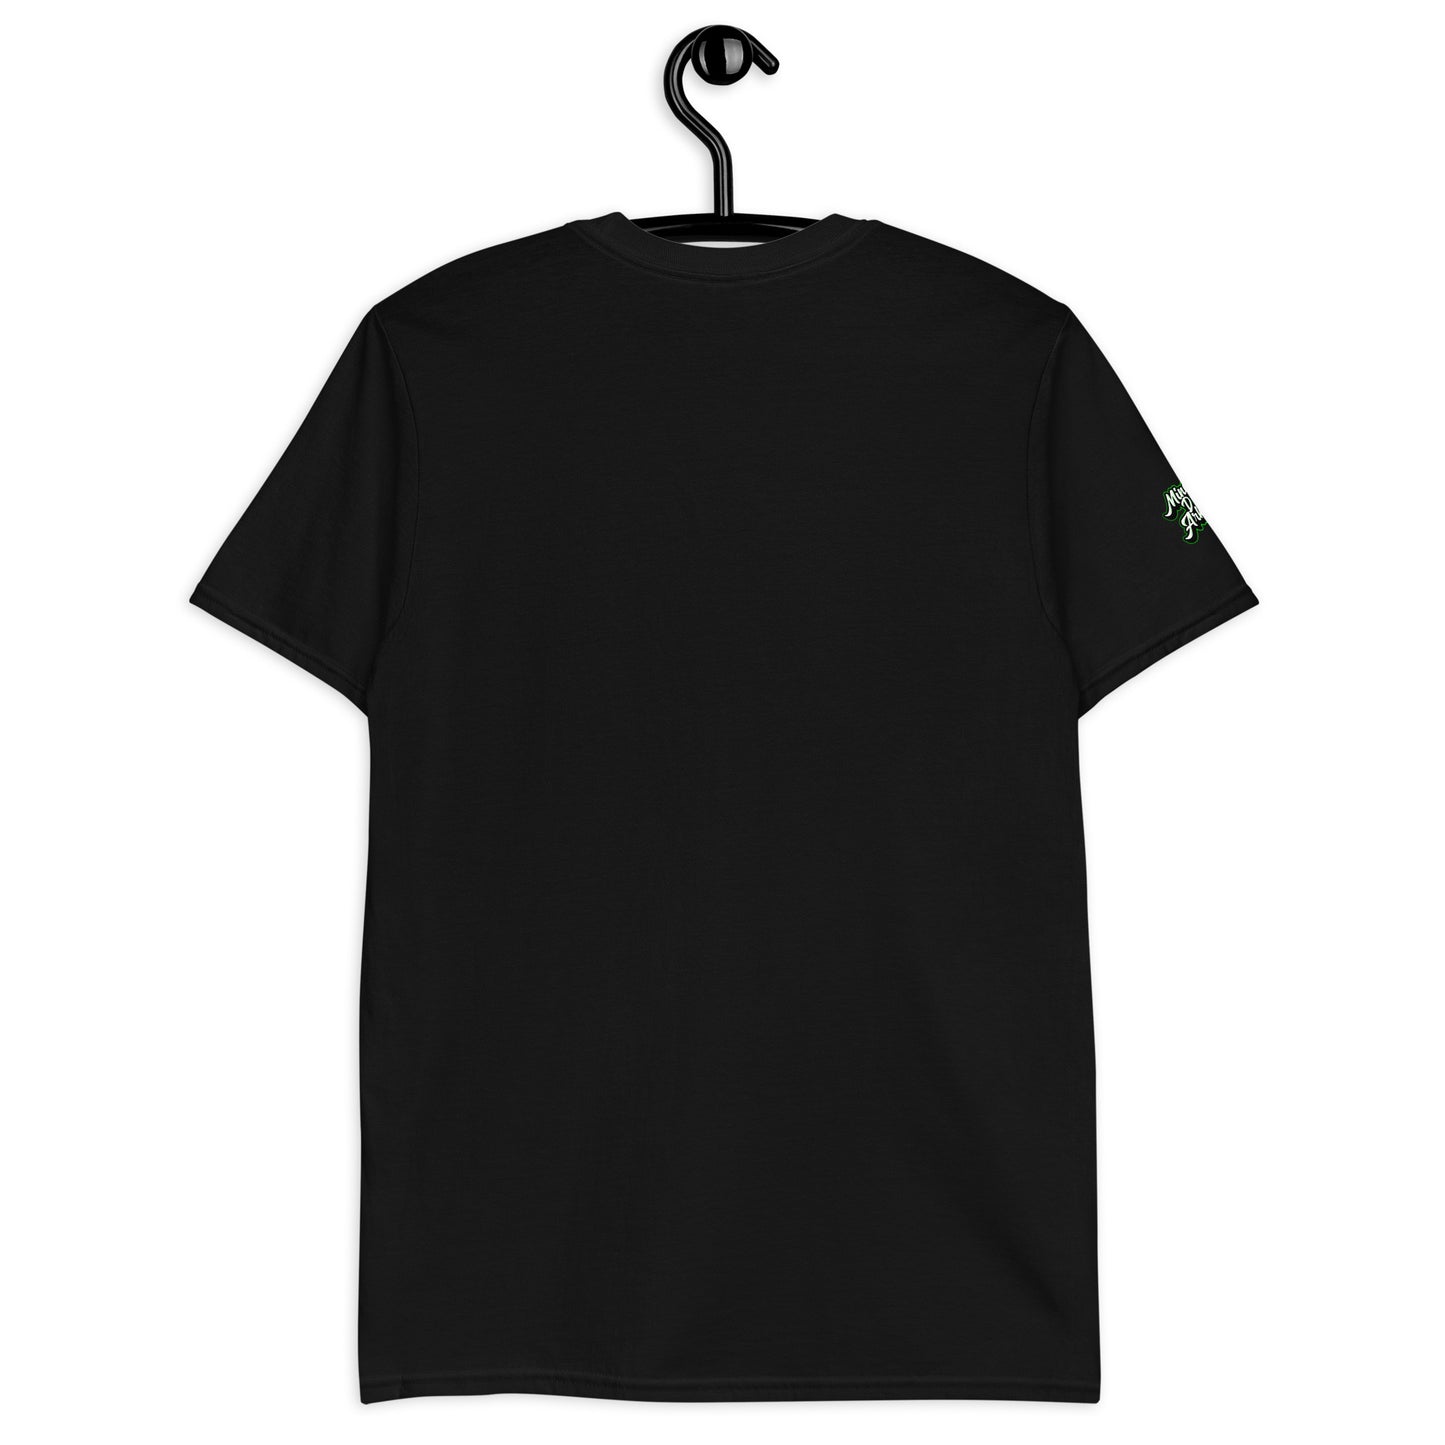 MDA Vol. 1 ,Short-Sleeve Unisex T-Shirt